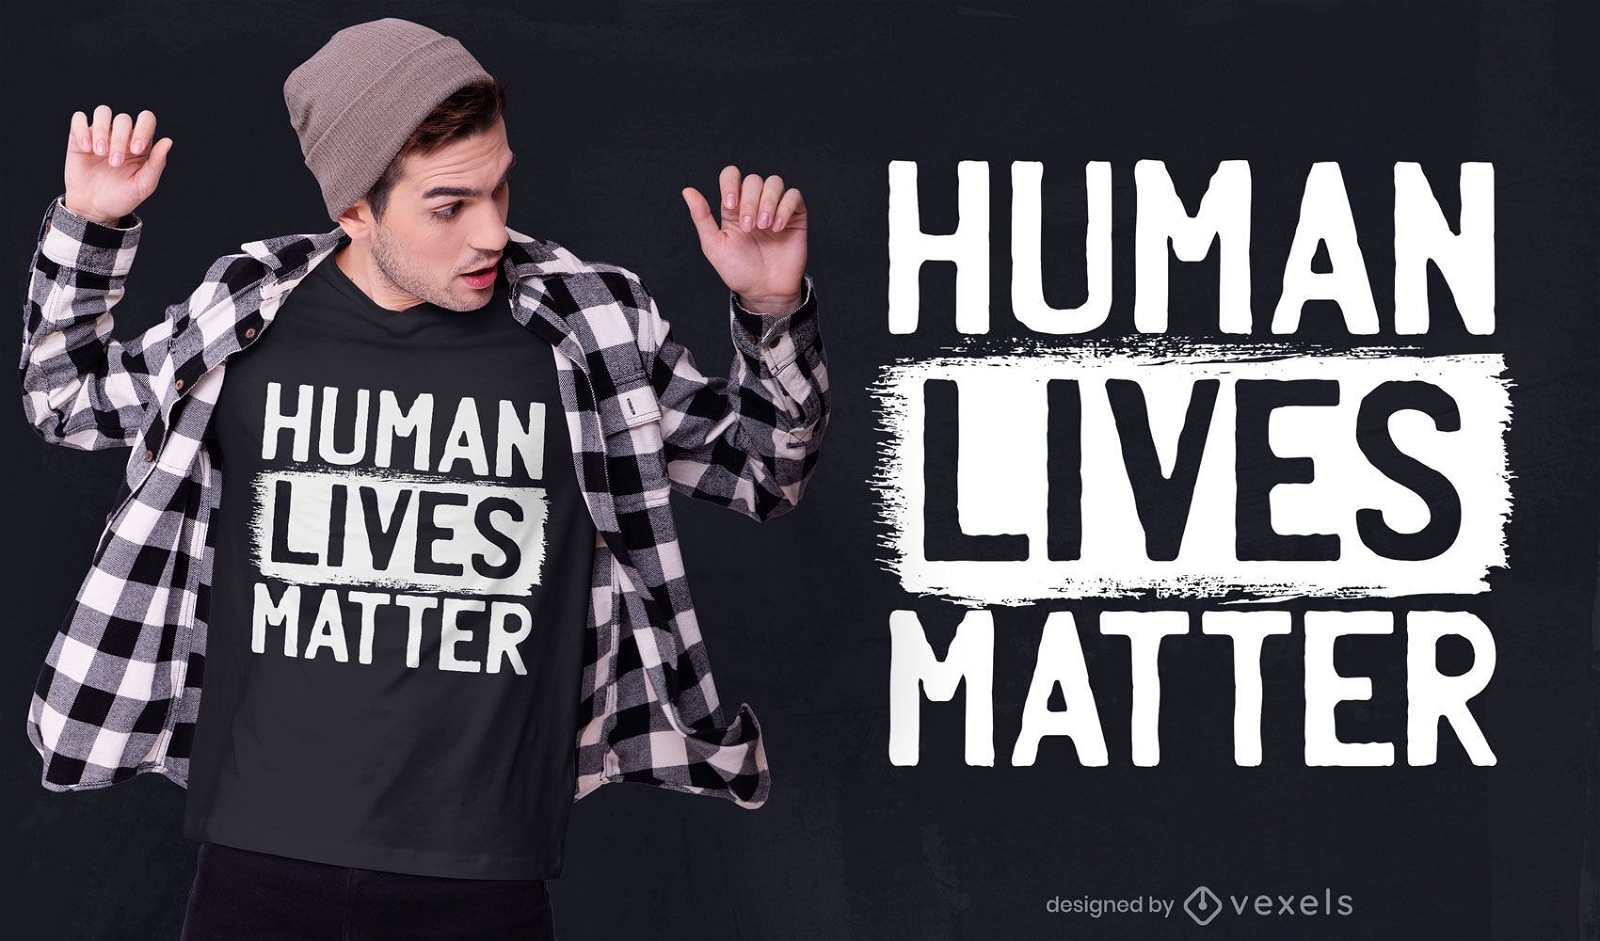 Vidas humanas importam design de camiseta